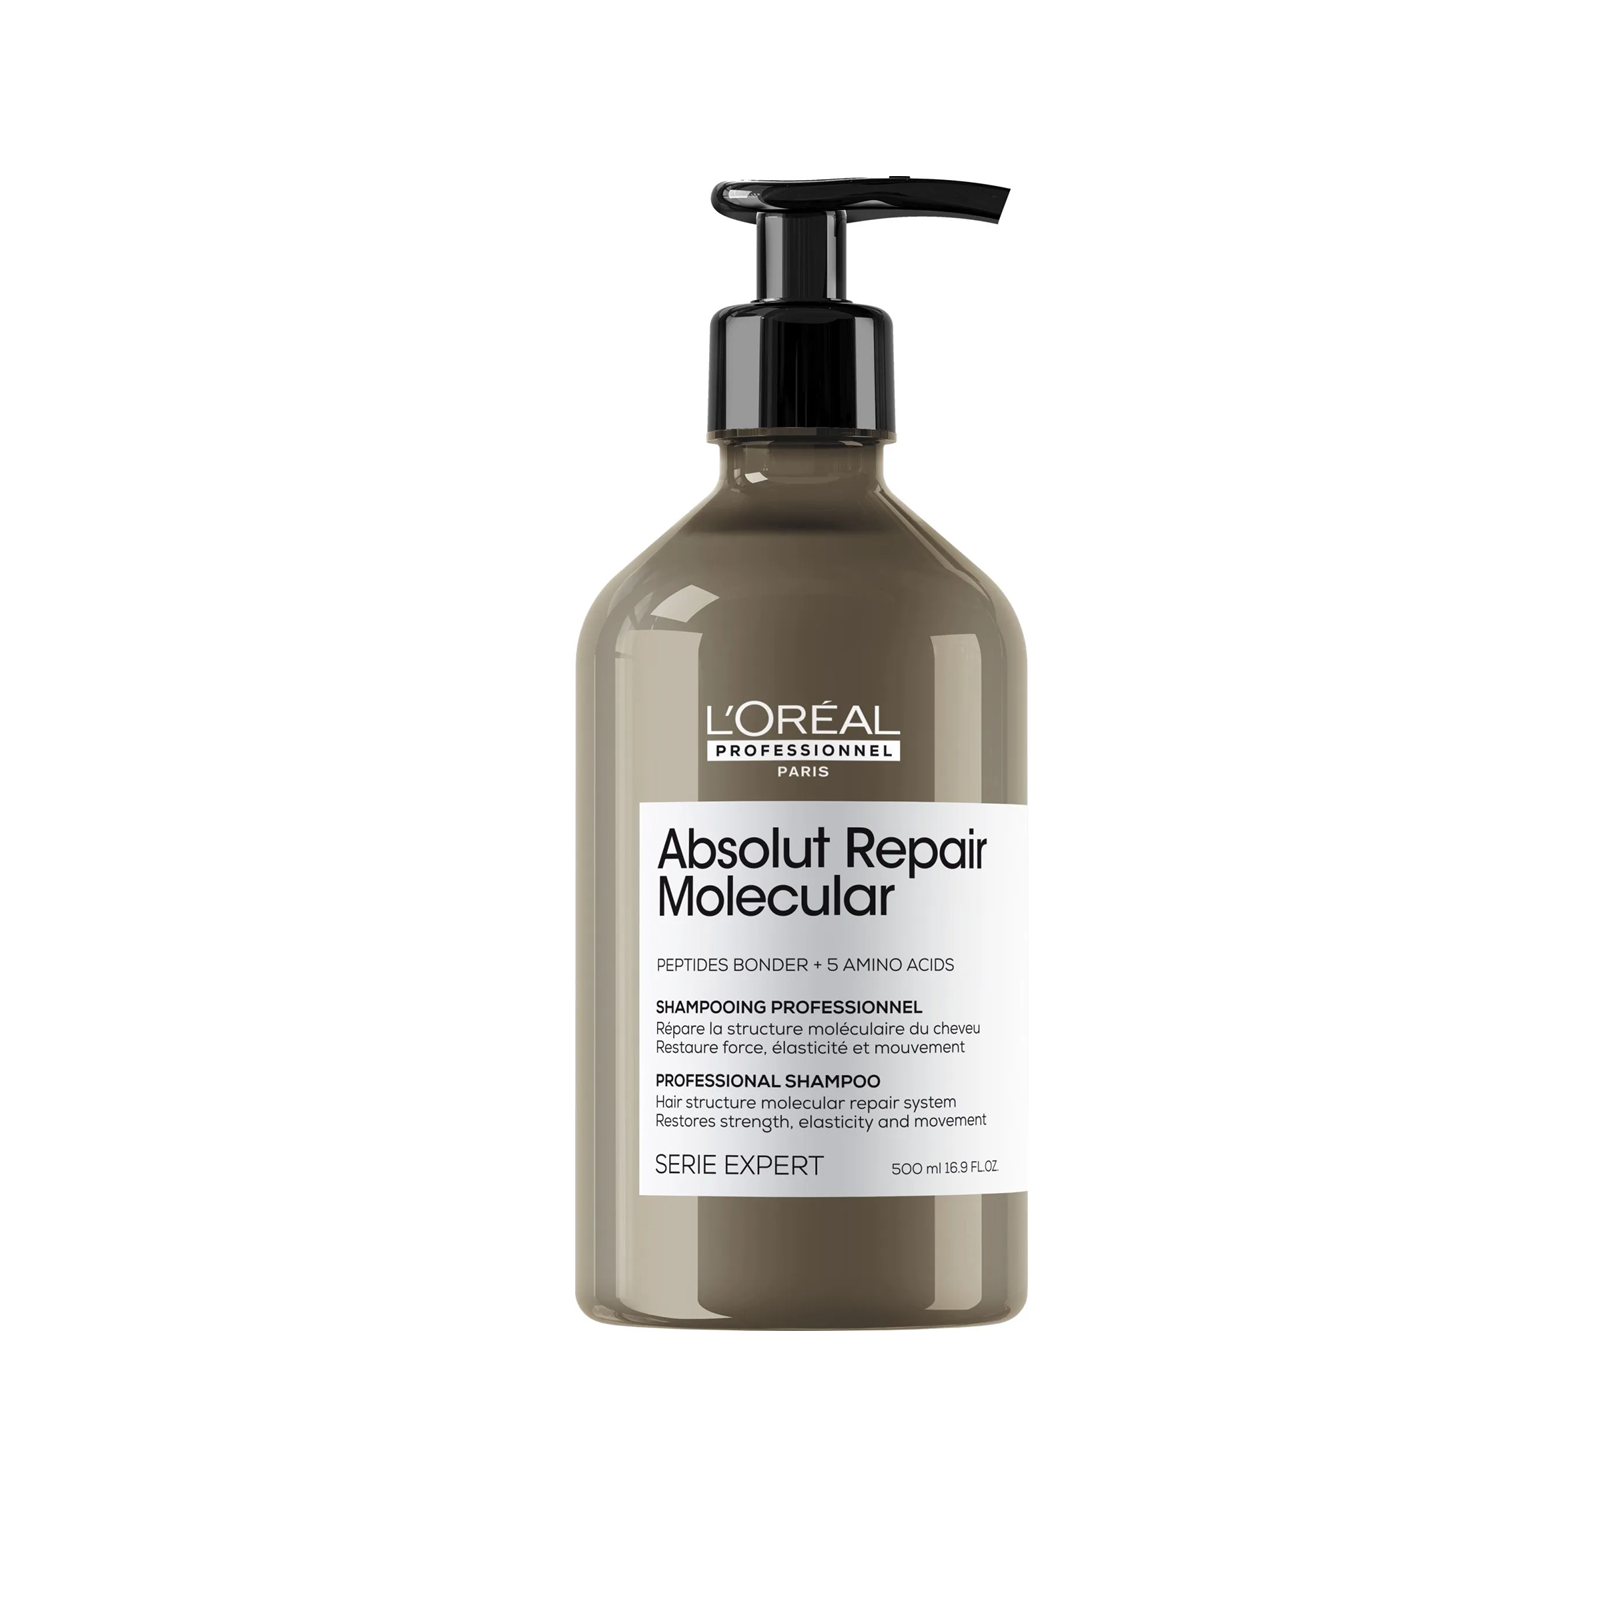 loreal professionnel szampon absolut repair 500ml